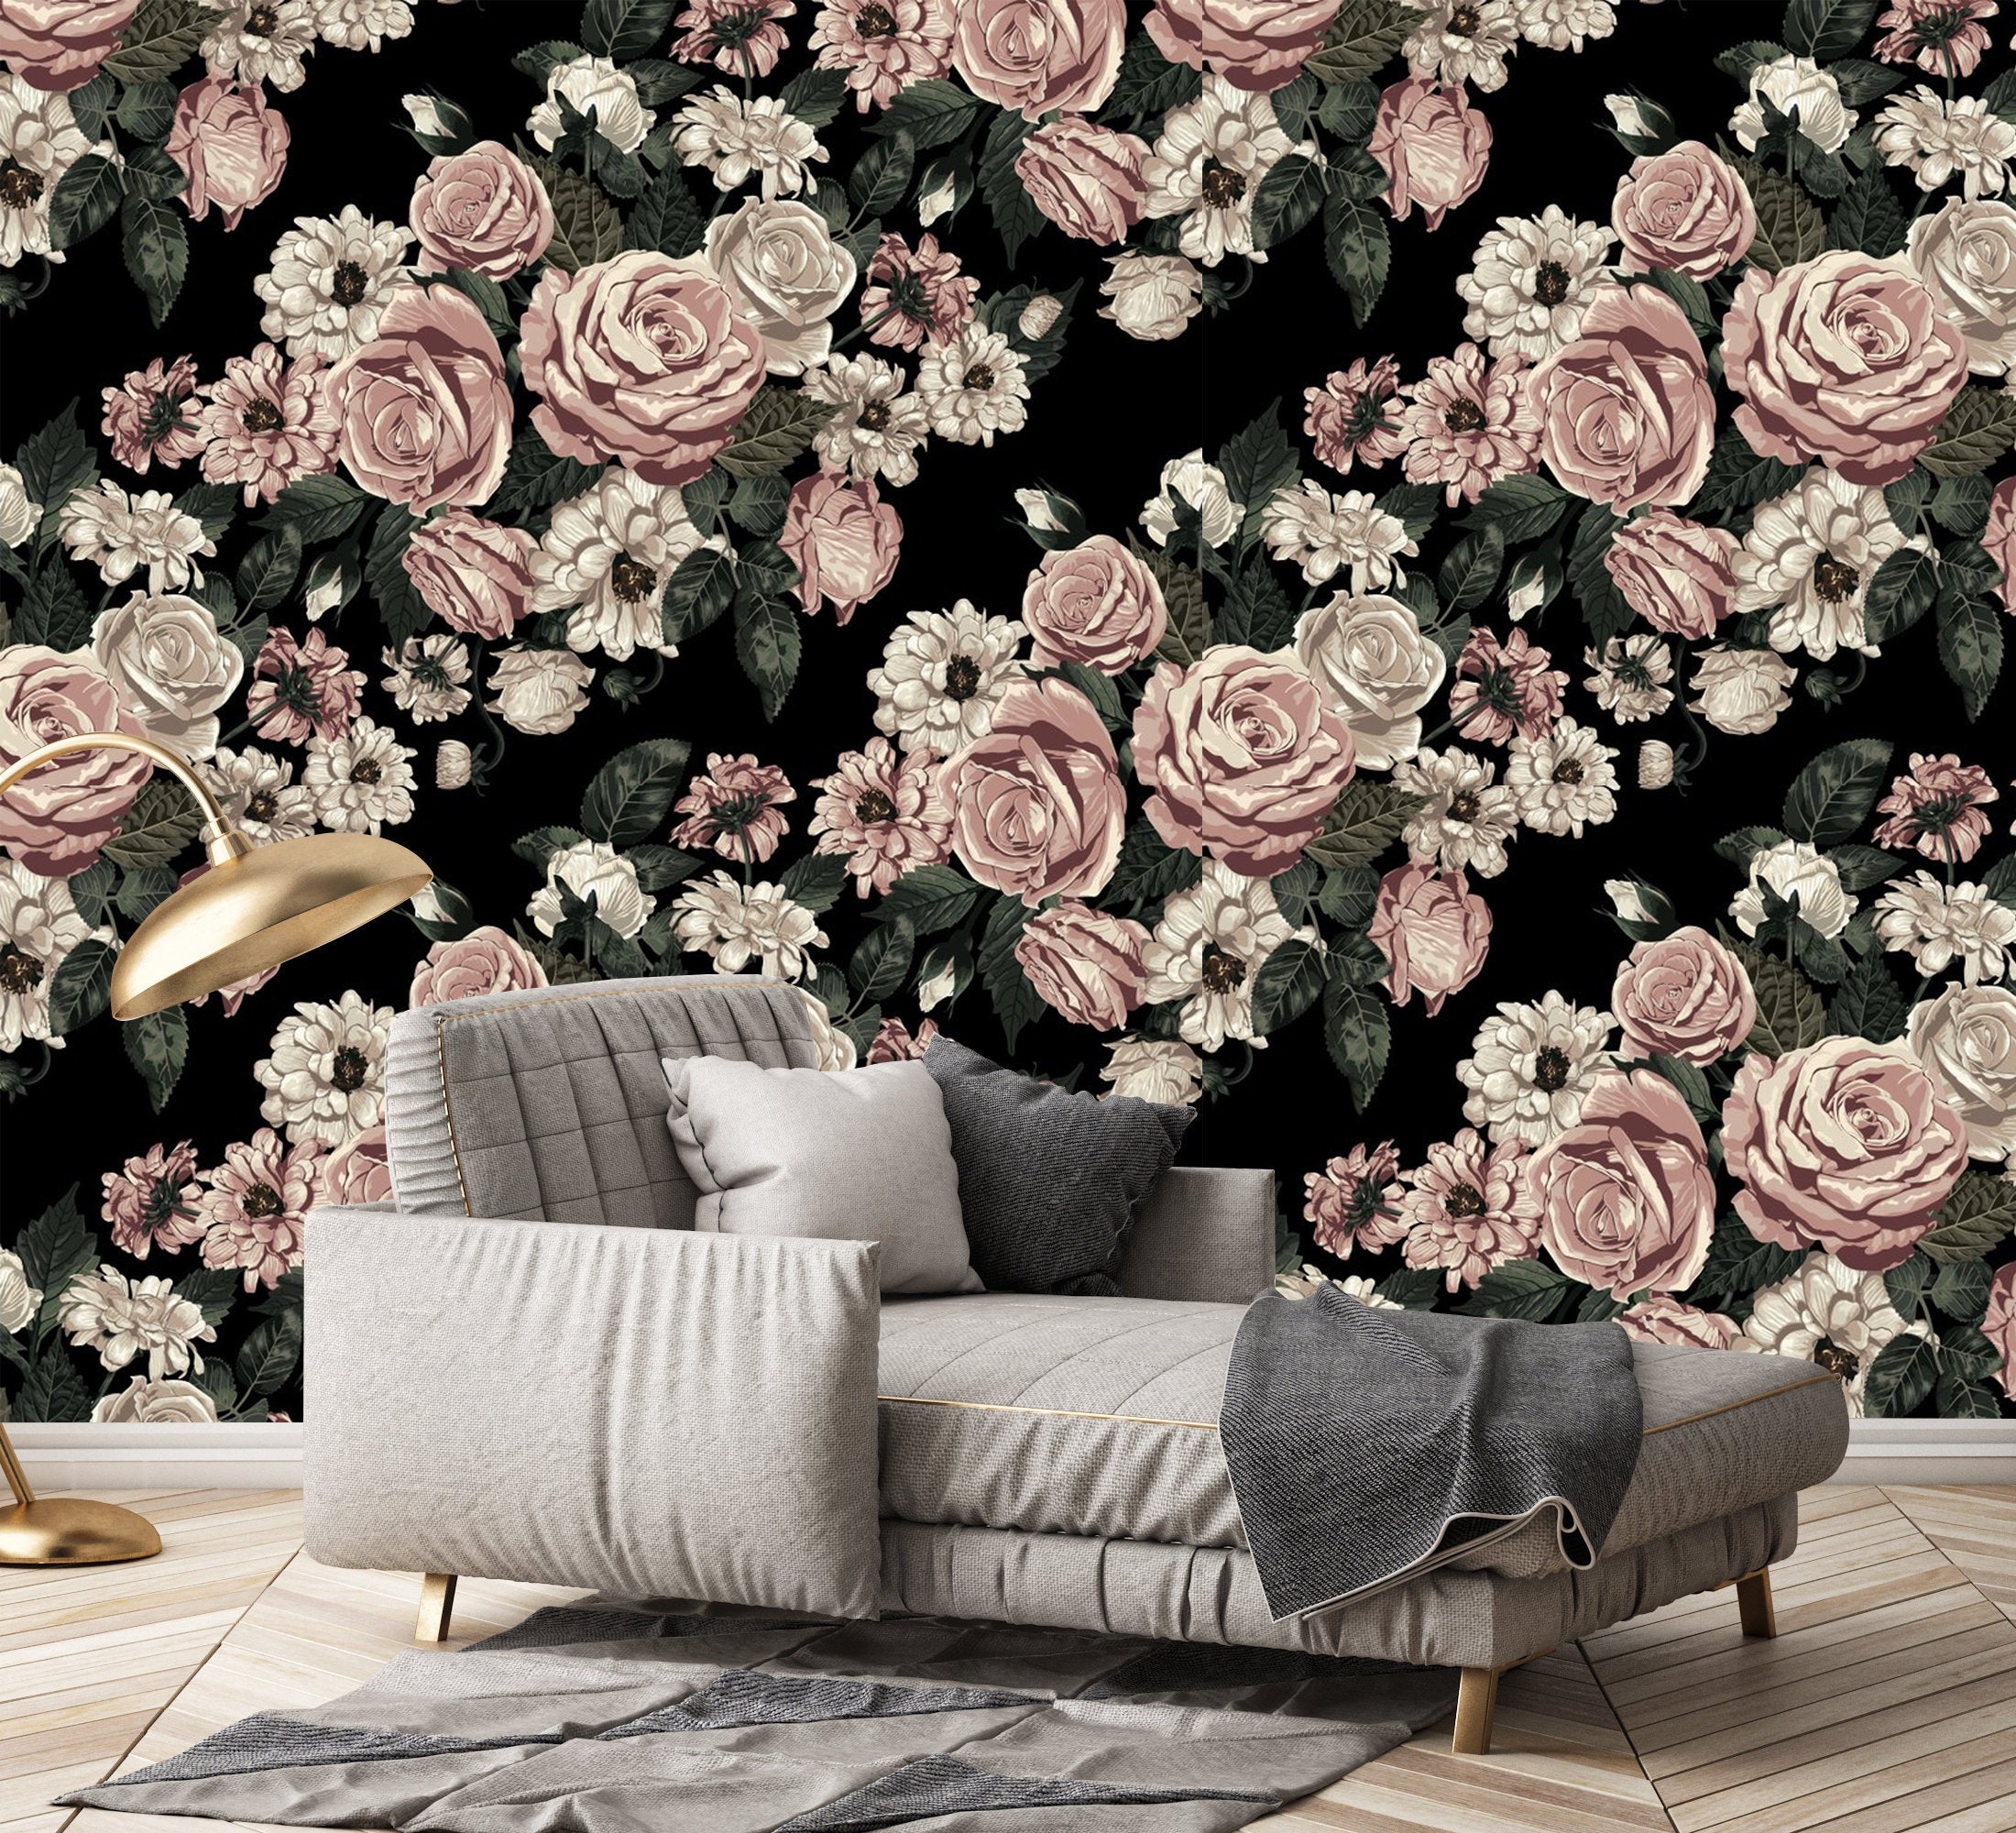 Blush Toned Rustic Roses  Flowers Floral Wallpaper